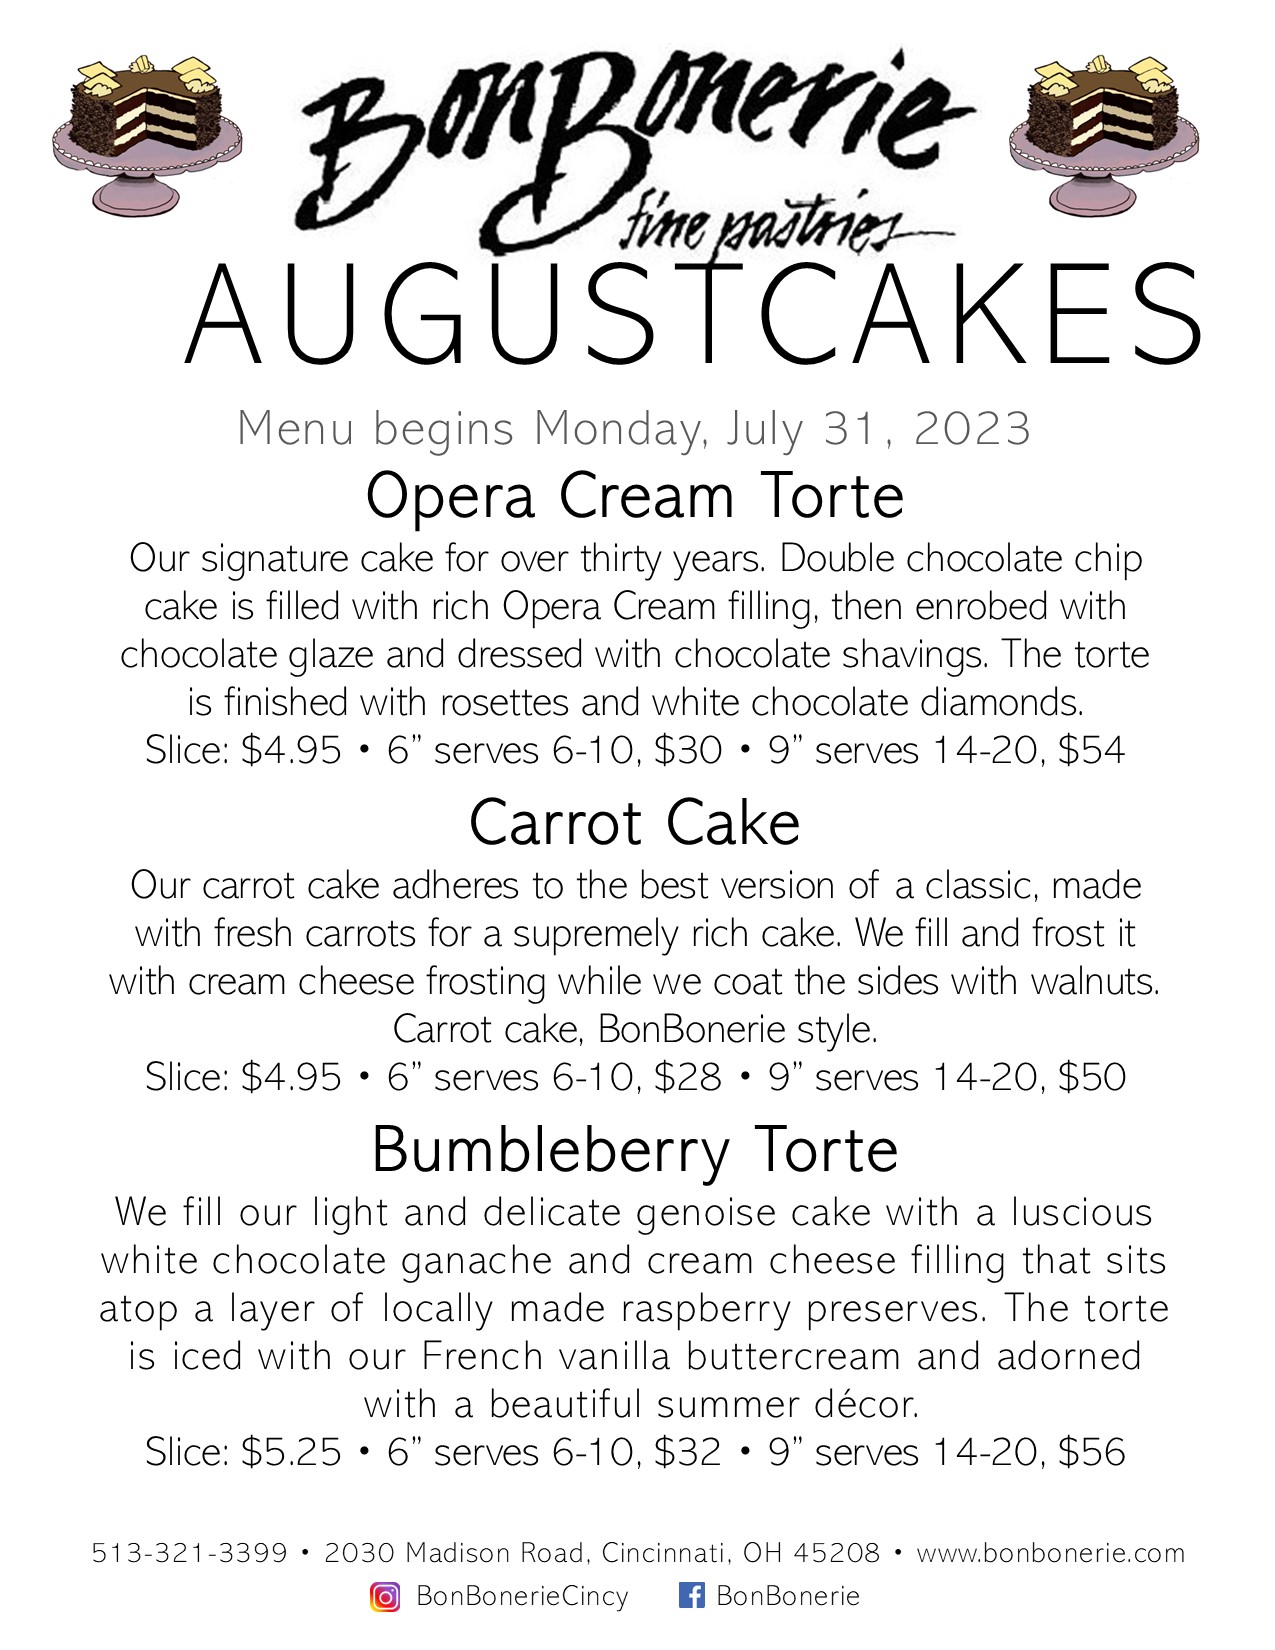 August cake menu